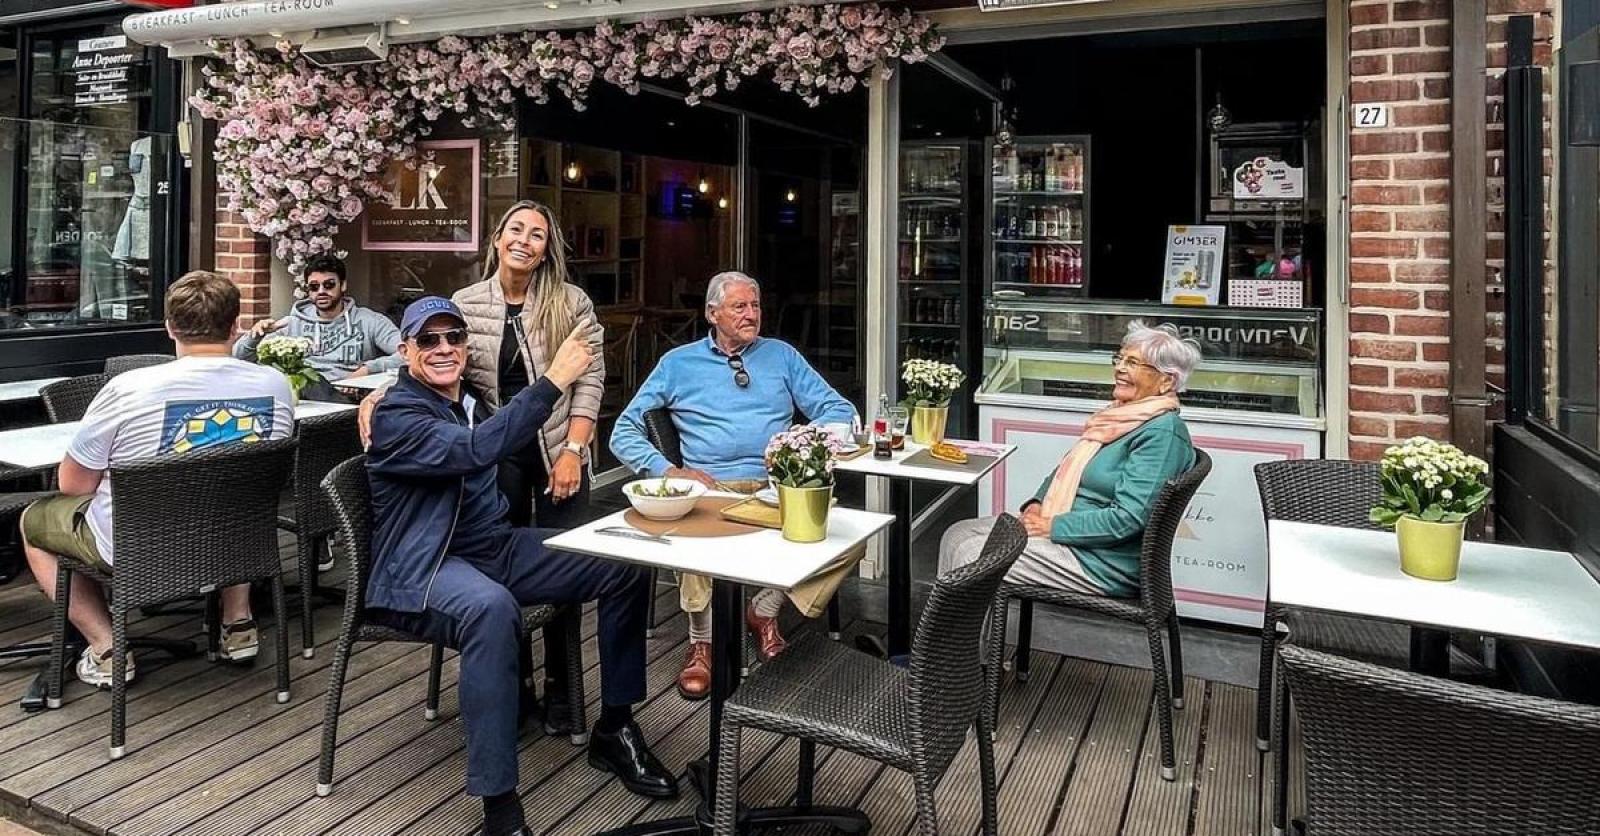 Jean-Claude Van Damme visita il nuovo reparto di ristorazione di sua nipote a Knokke-Heist: “Arriverà sicuramente quest’estate!”